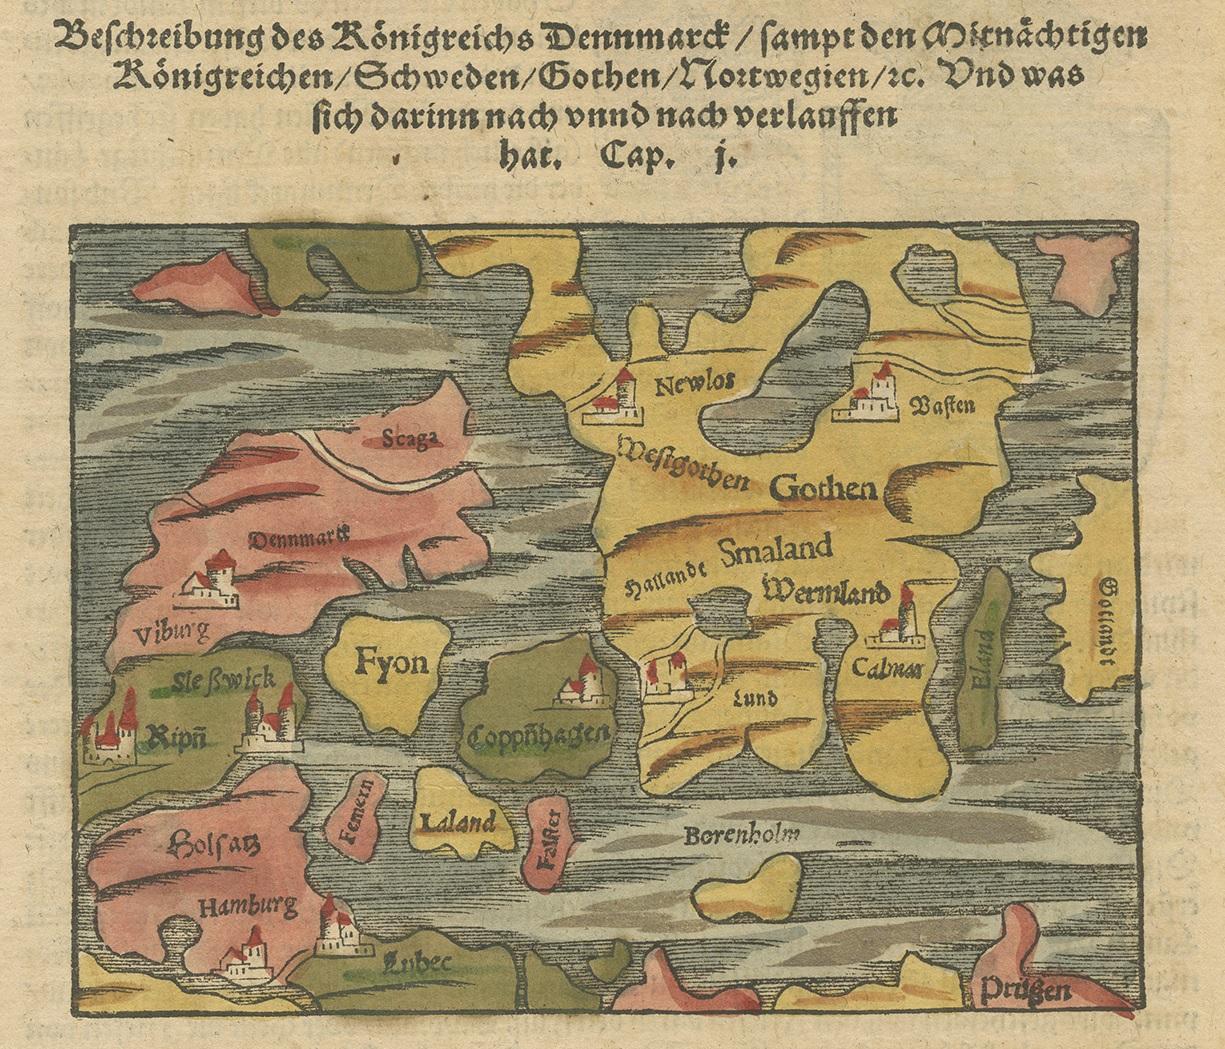 Antique map titled 'Beschreibung des Königreichs Dennmarck (..)'. Early map of Denmark. This map originates from 'Cosmographey Oder beschreibung Aller Länder (..)' by Sebastian Münster.